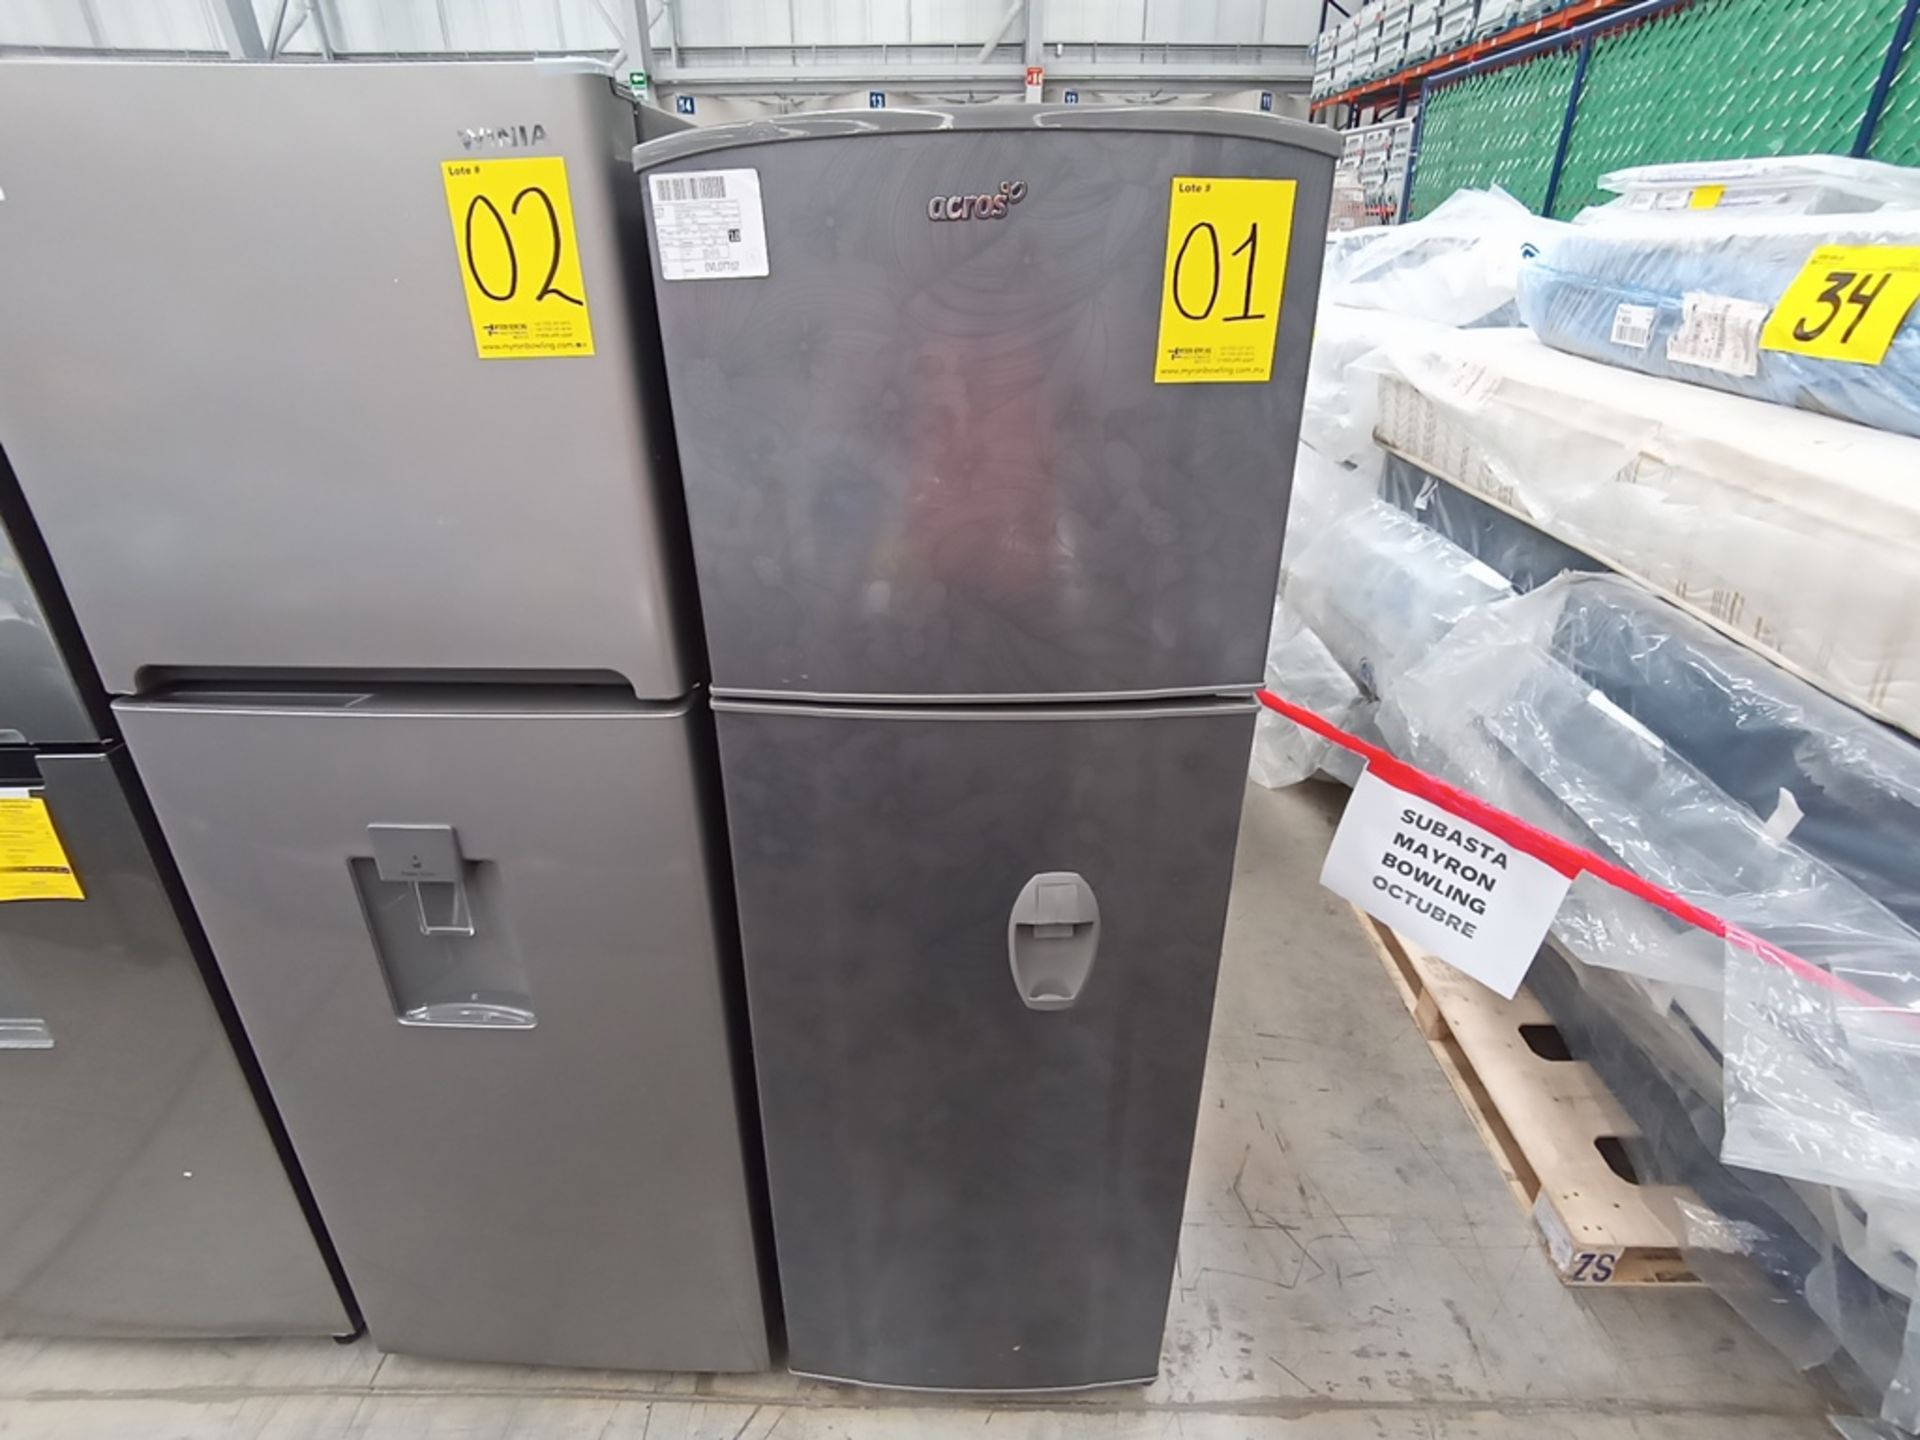 1 Refrigerador con dispensador de agua, marca Acros, Modelo AT096FG01, Serie VRA0636575, Color Gris - Image 6 of 10